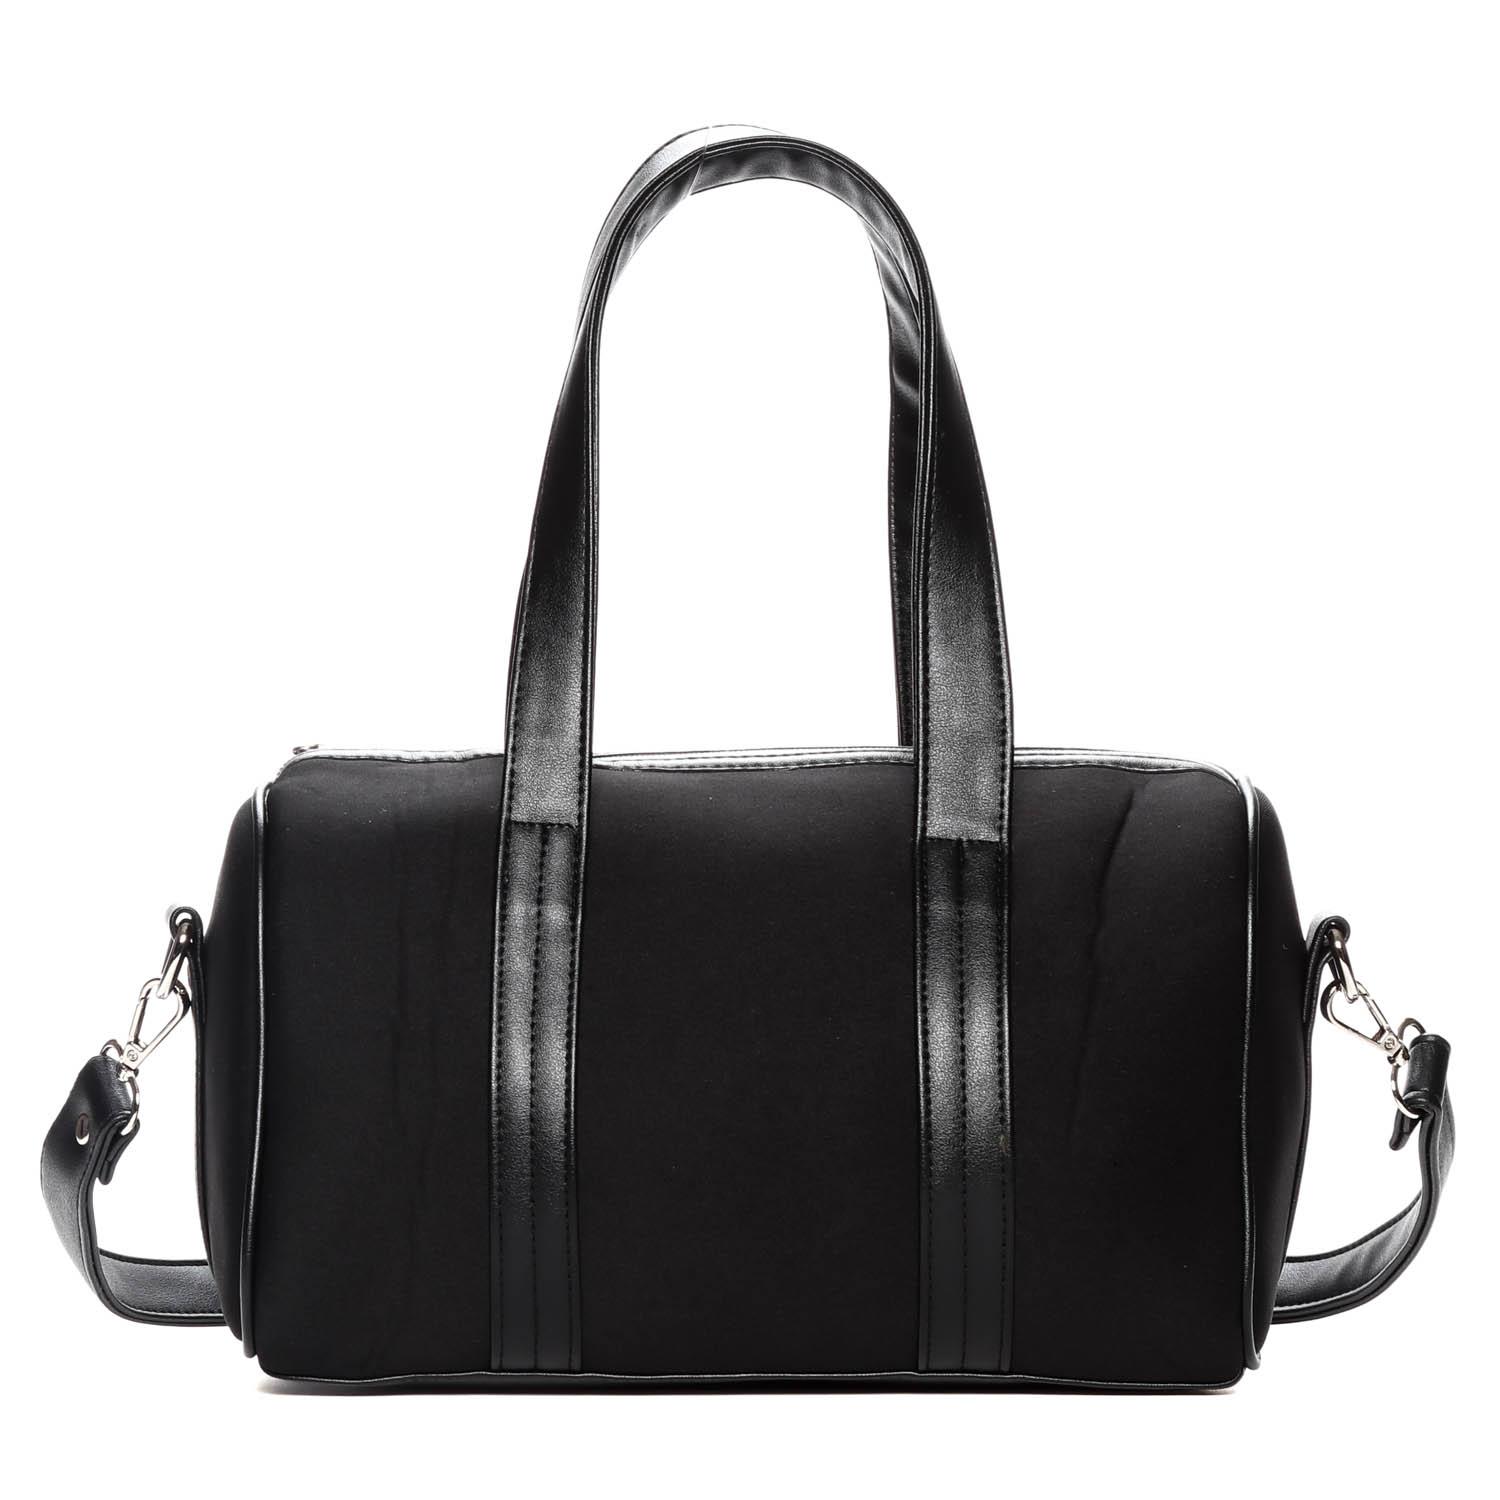 Givenchy Handbag Price Philippines | semashow.com